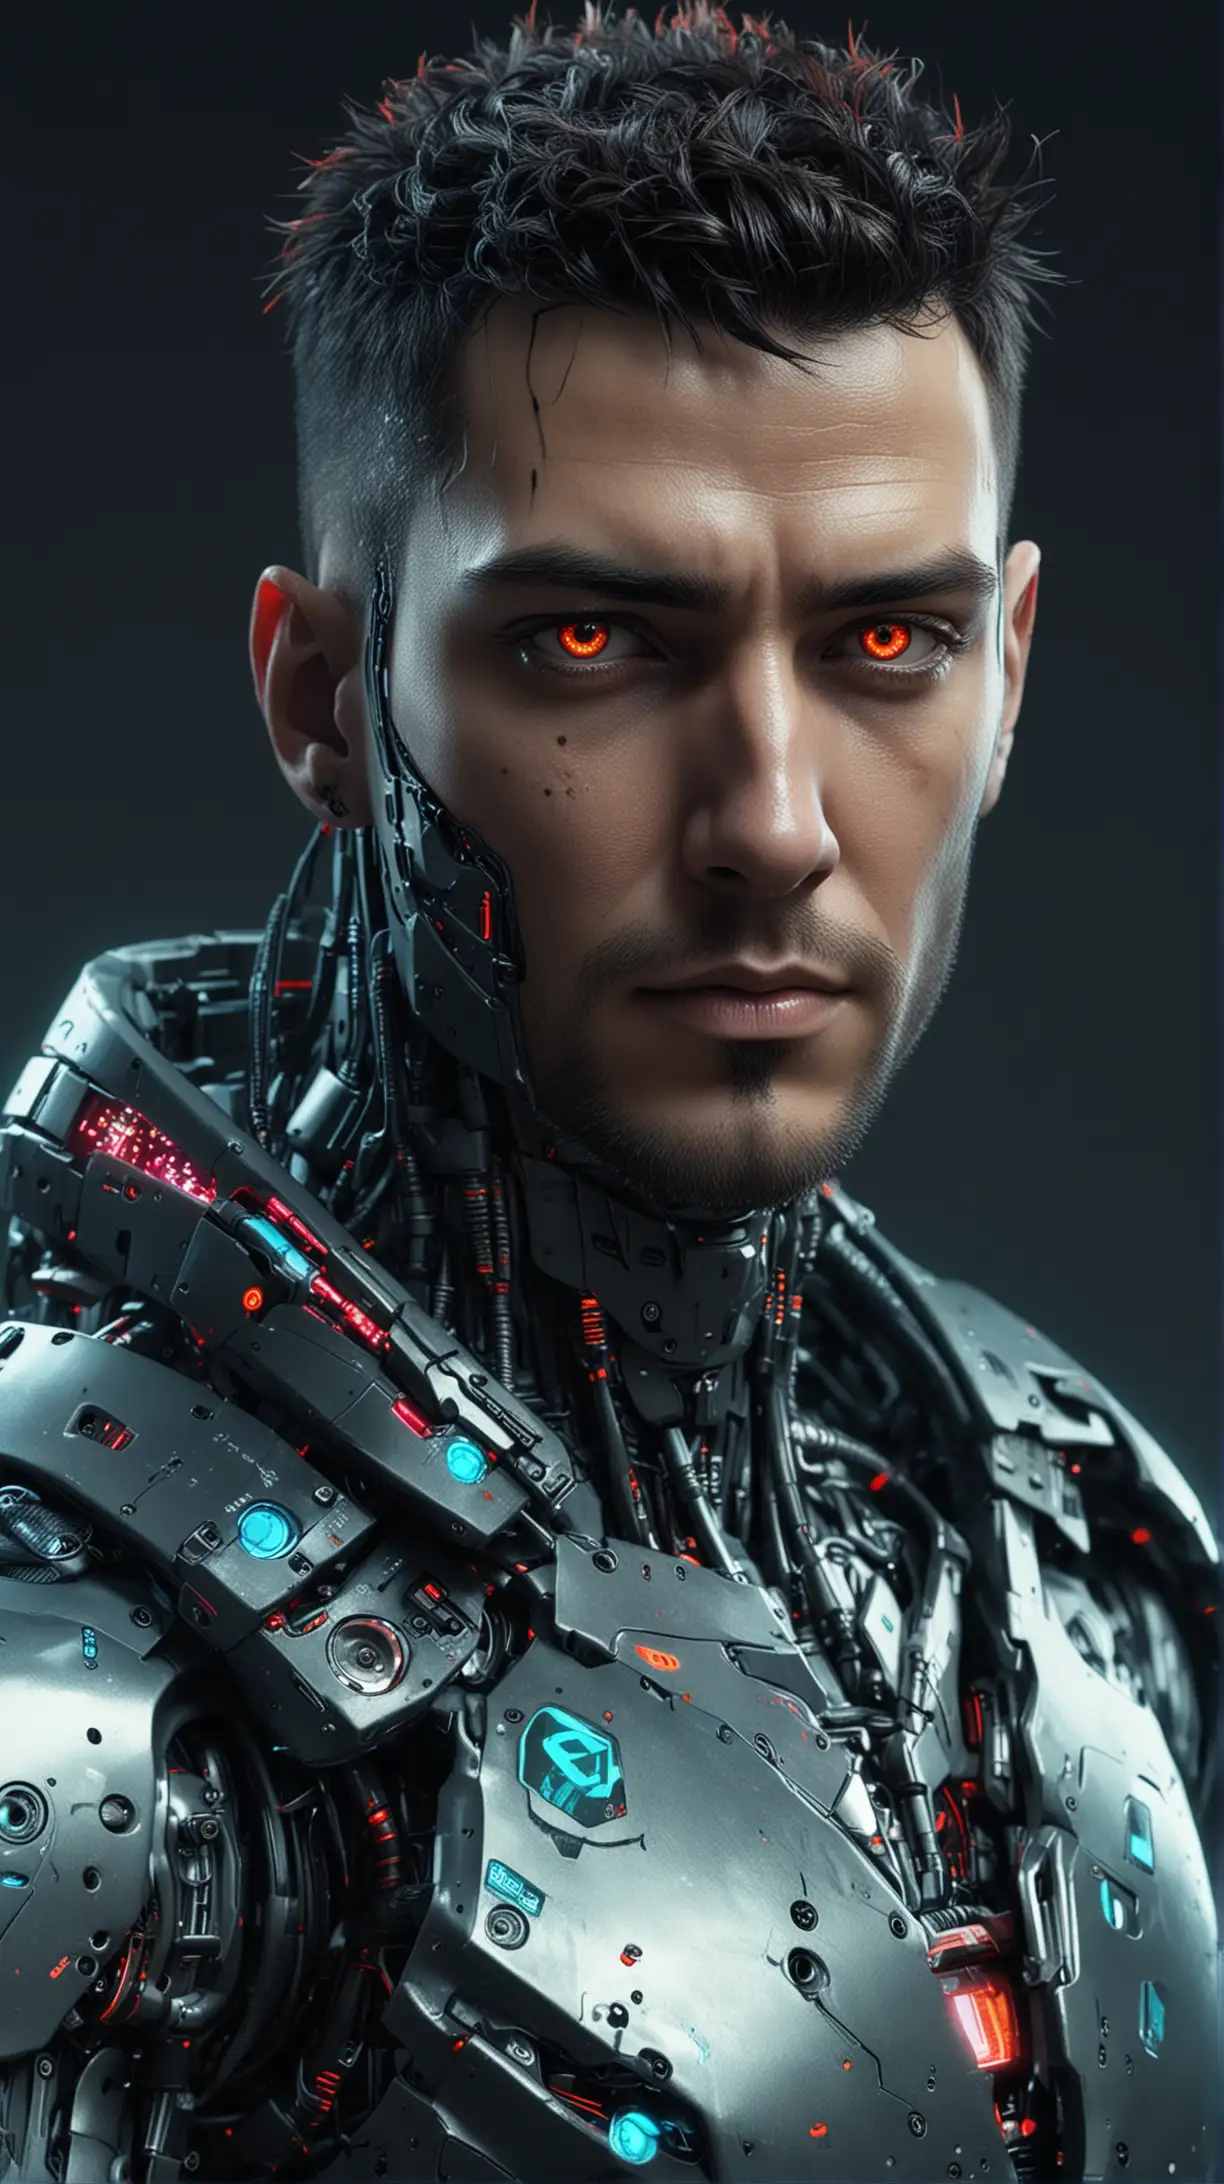 cyberpunk man in the style of Eset robot AI, vivid shine color setup, near future